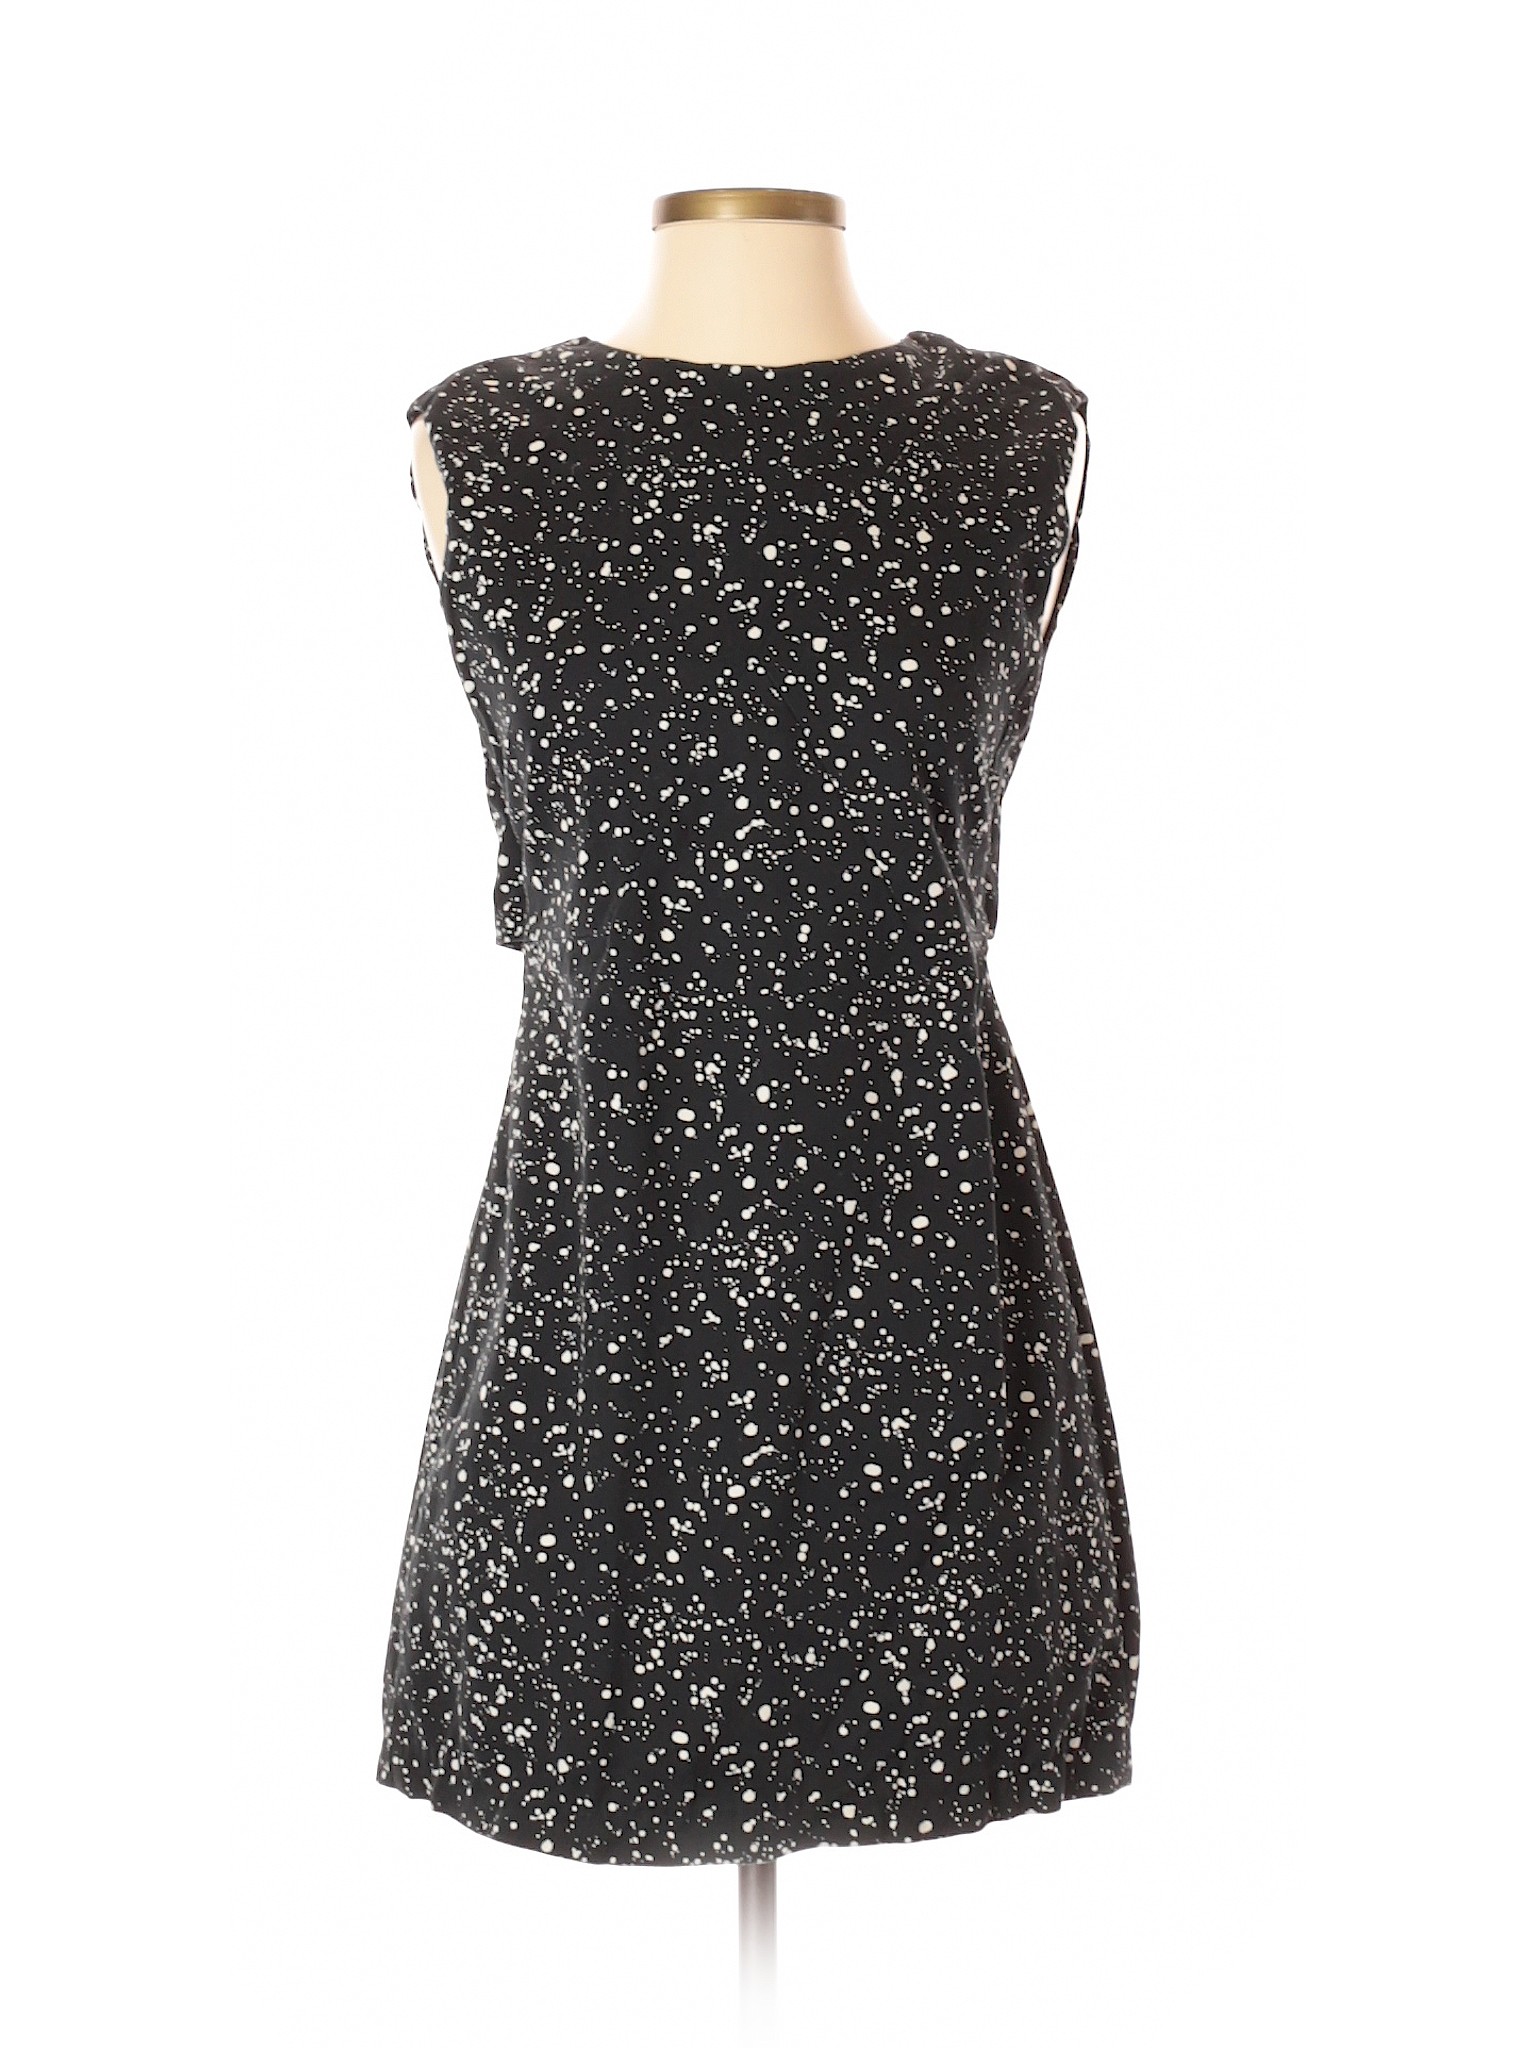 Kate Spade New York Print Black Casual Dress Size 00 - 86% off | thredUP